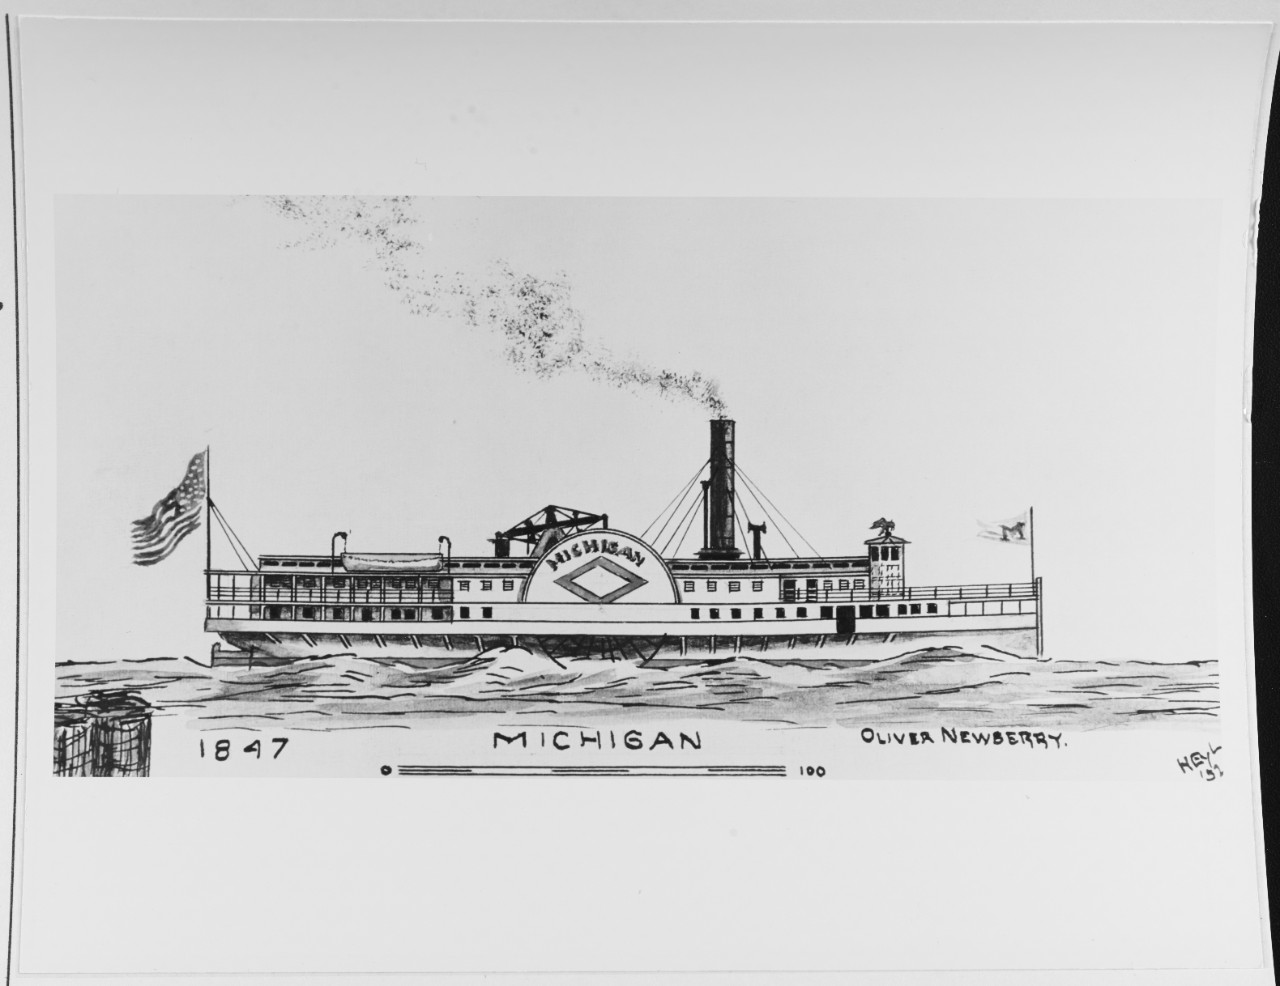 MICHIGAN (American merchant steamer, 1847-1865)